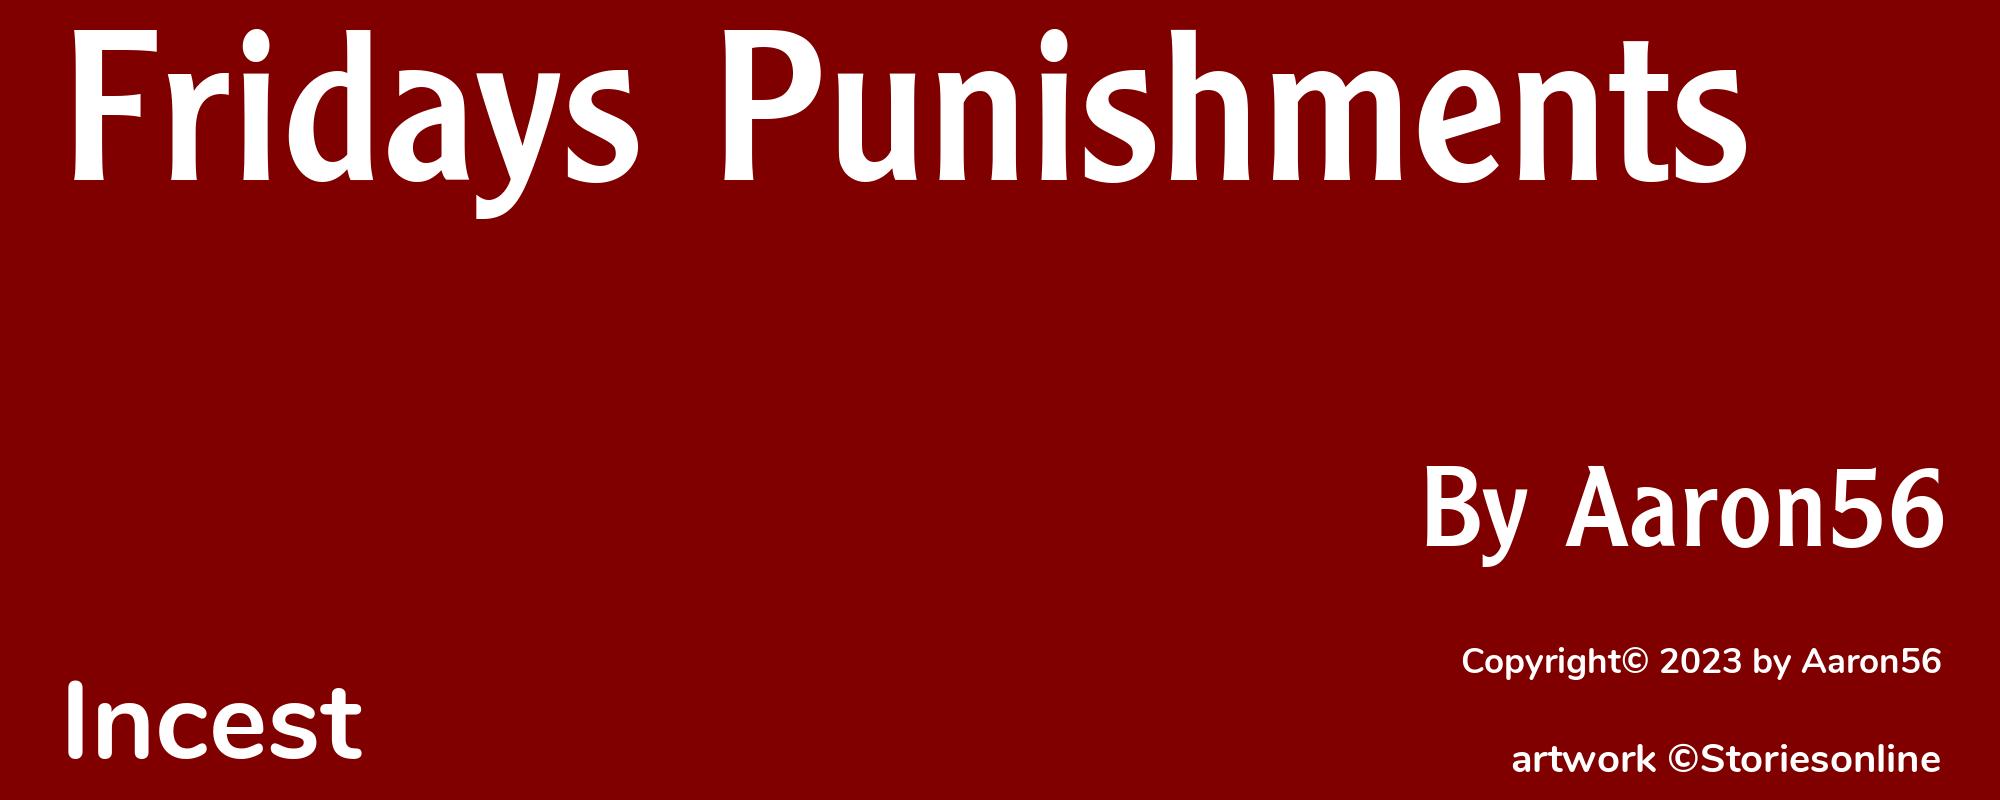 Fridays Punishments - Cover